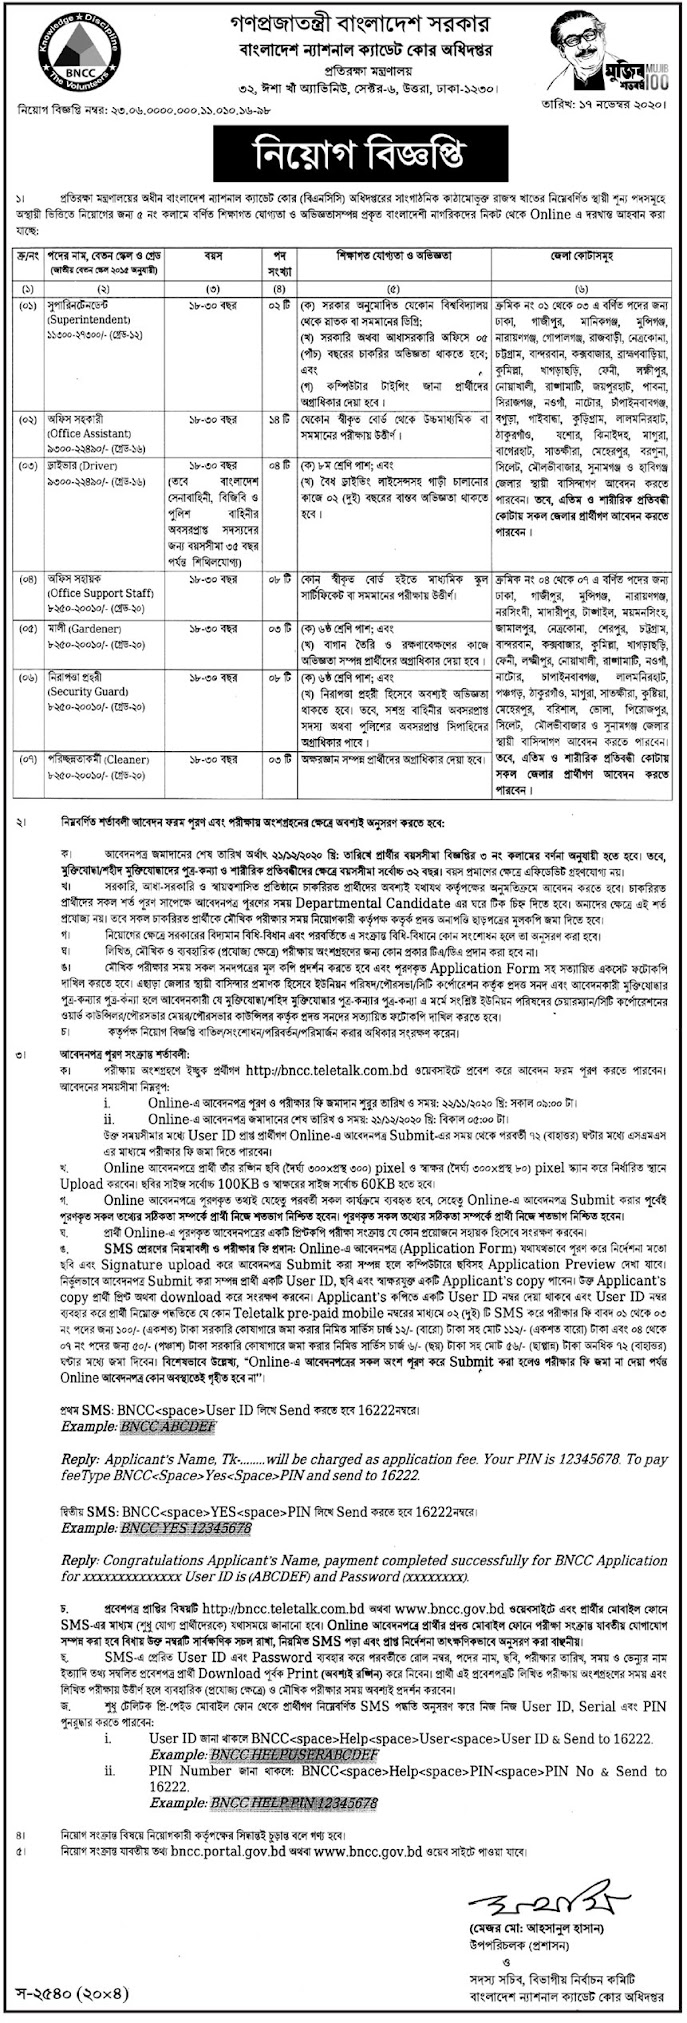 Bangladesh National Cadet Corps (BNCC) Job Circular 2020 / বাংলাদেশ জাতীয় ক্যাডেট কর্পস (বিএনসিসি) জব সার্কুলার ২০২০